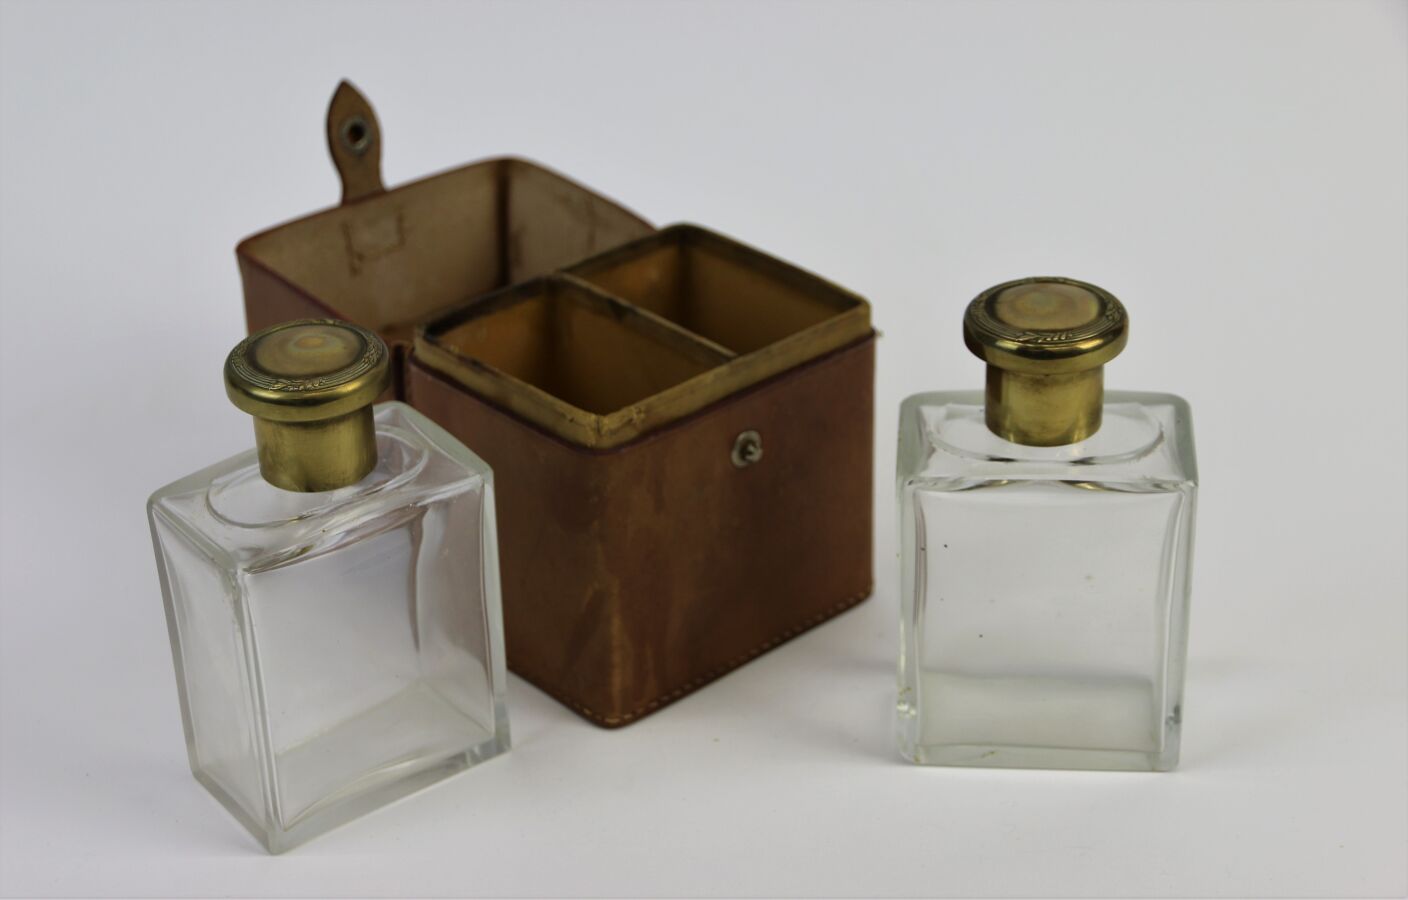 Null 法国作品（20世纪20年代）

平滑的绗缝皮革旅行箱内装有两个无色的水晶旅行瓶，带有冲压的铜质支架和盖子。

瓶子的高度：11.5厘米